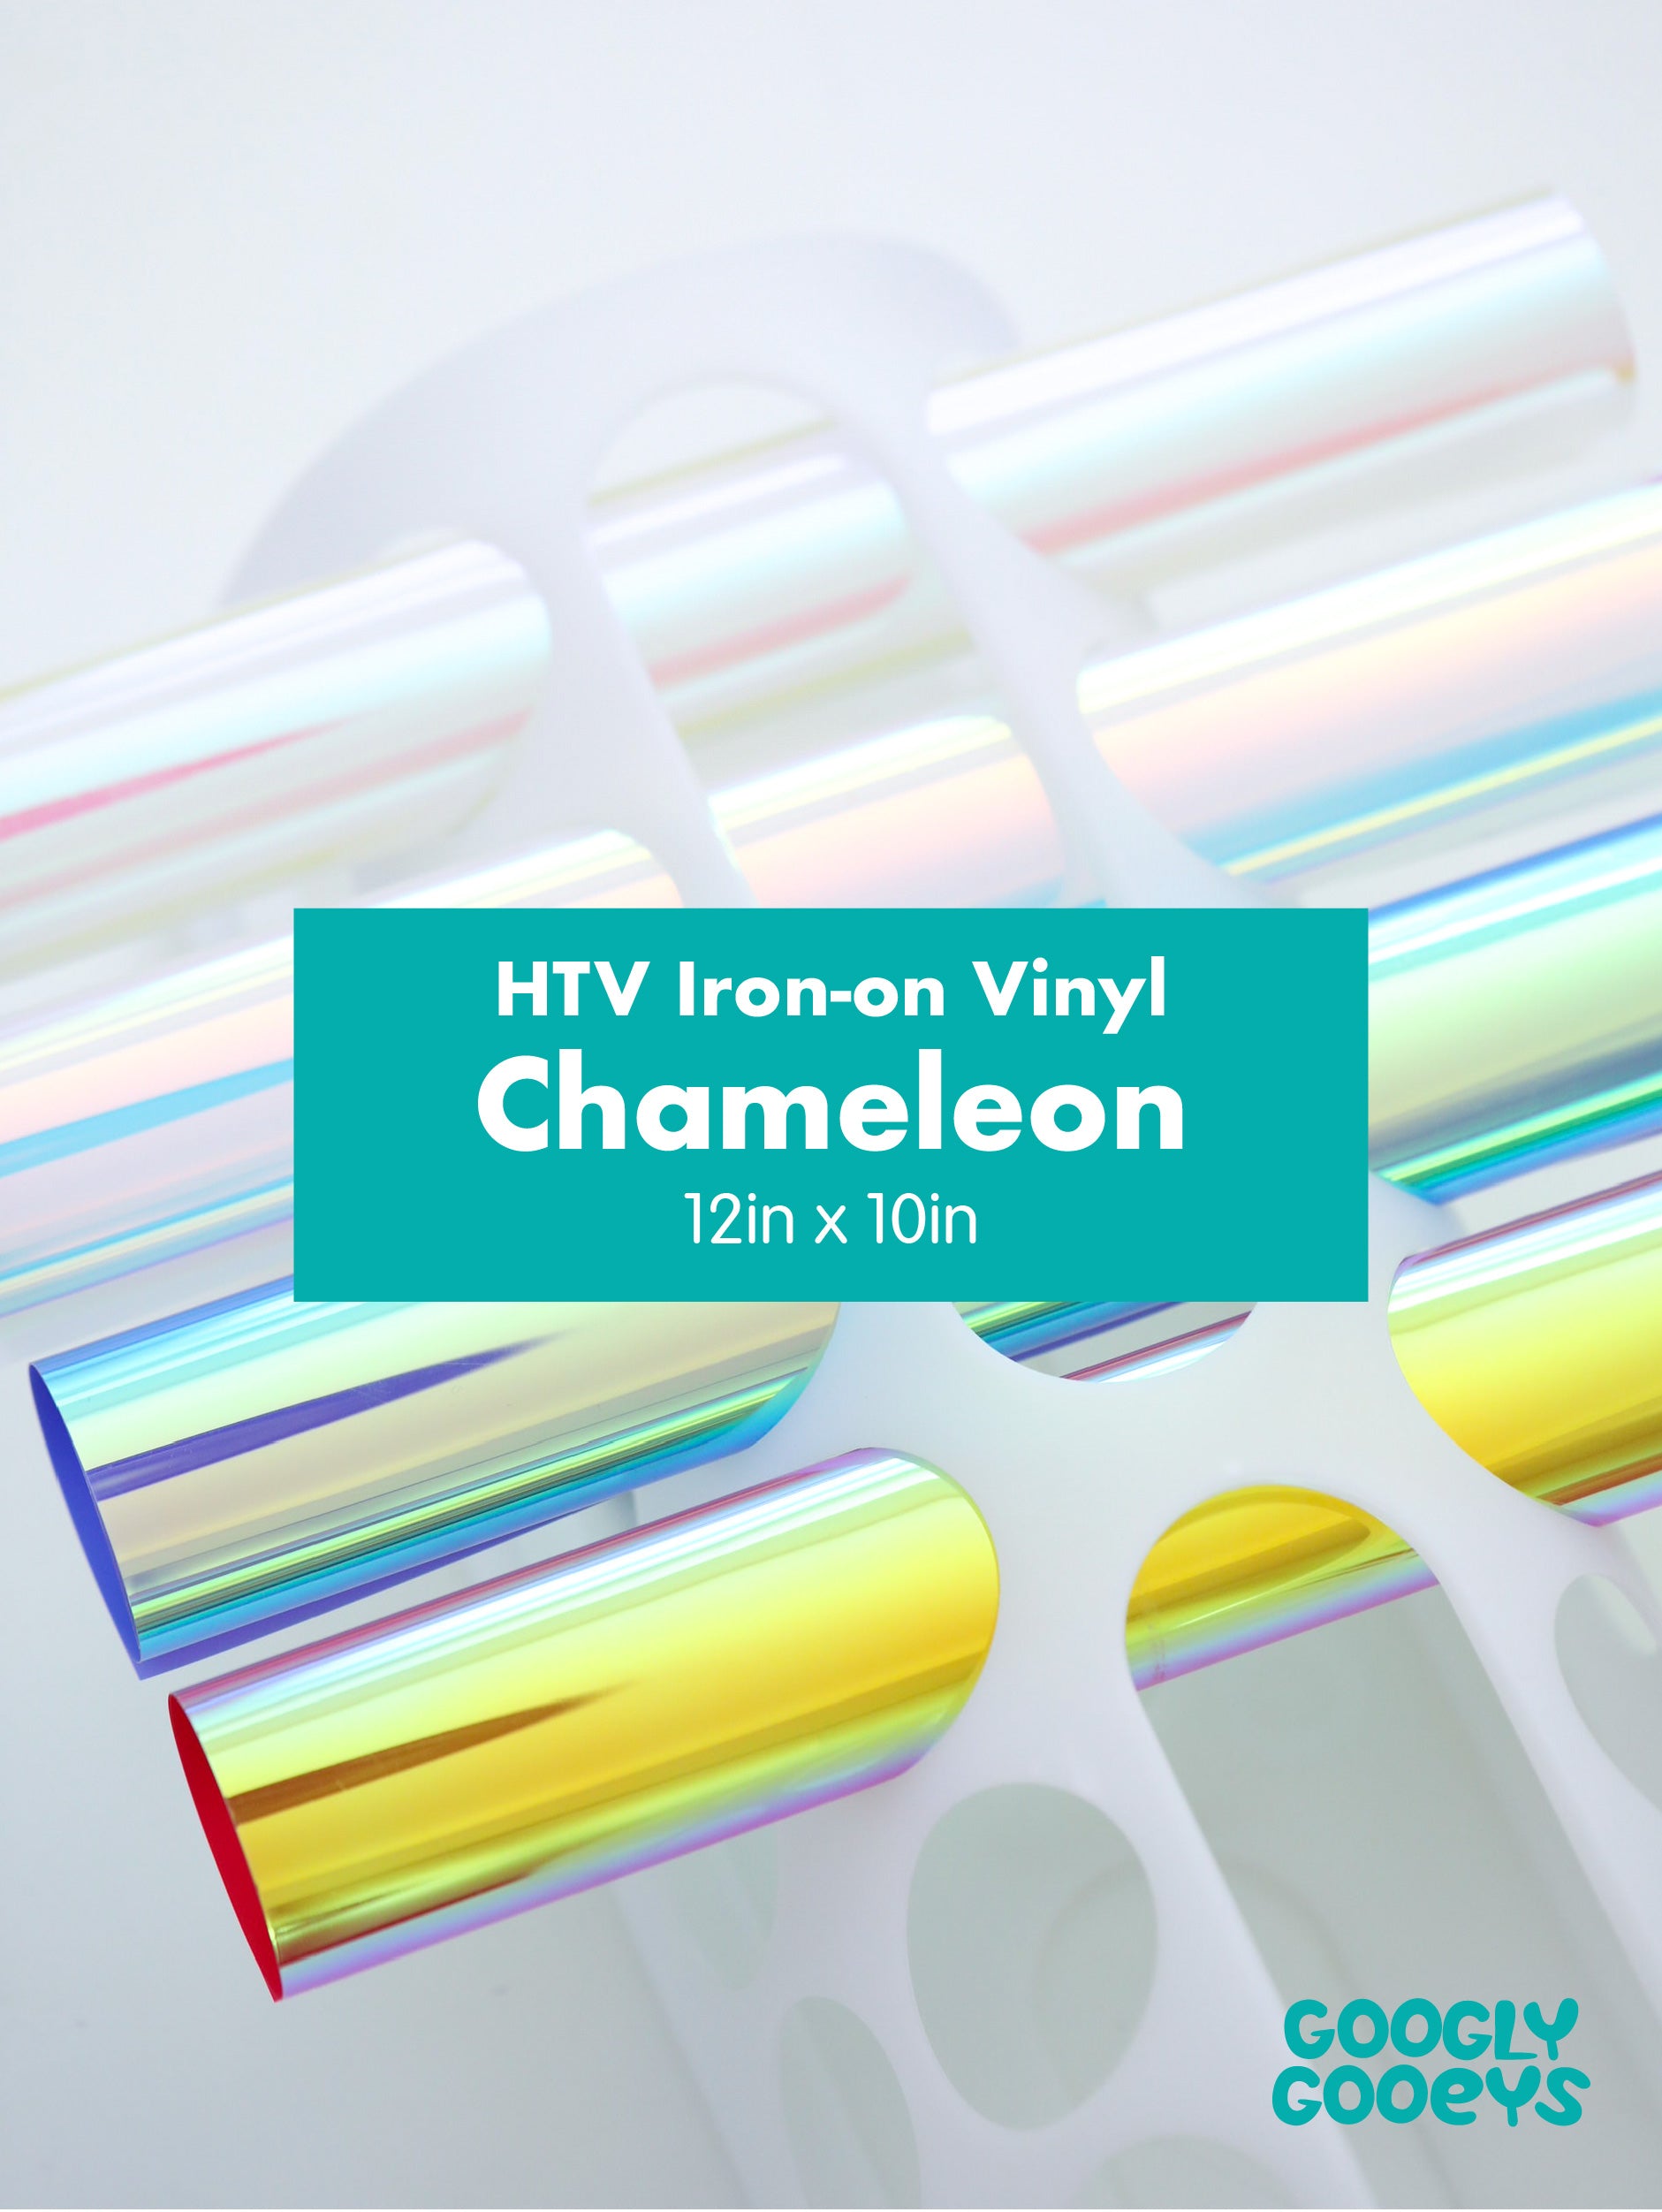 Googly Gooeys Chameleon HTV Heat Transfer Iron-on Vinyl (Soft PU)| 10x12 in Sheet